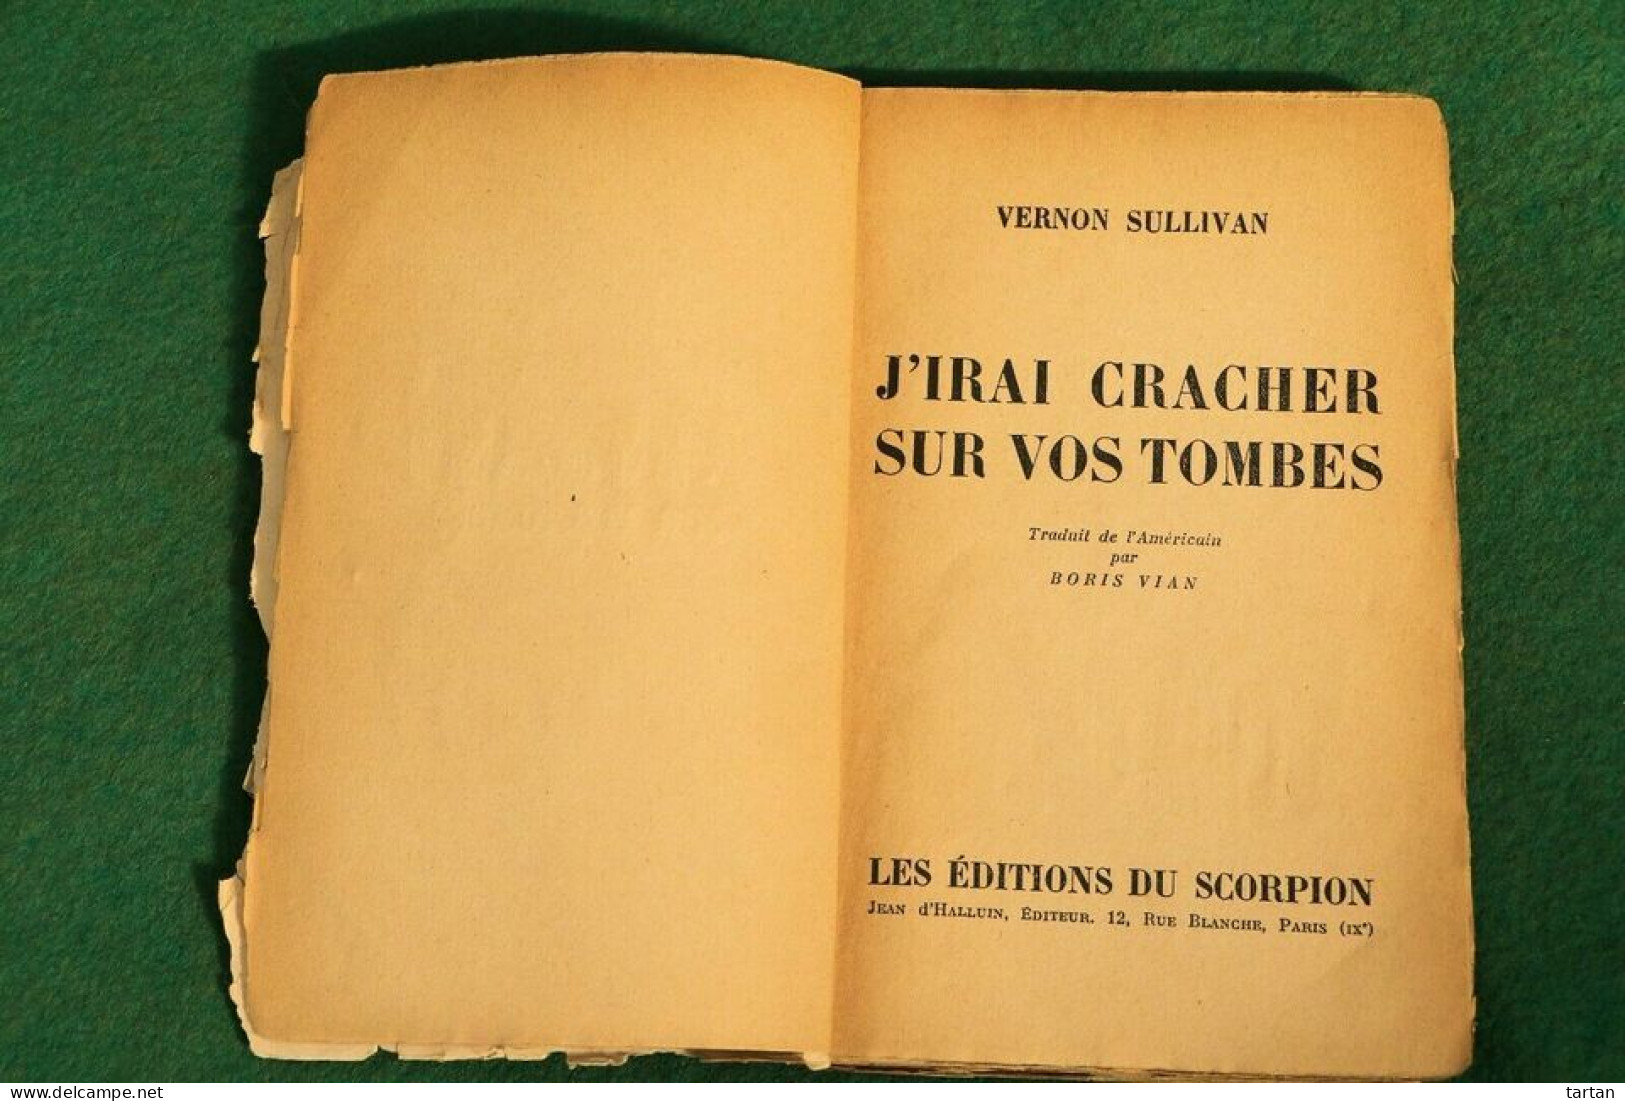 SULLIVAN (Vernon), (=Boris VIAN). "J'IRAI CRACHER SUR VOS TOMBES". - Klassische Autoren